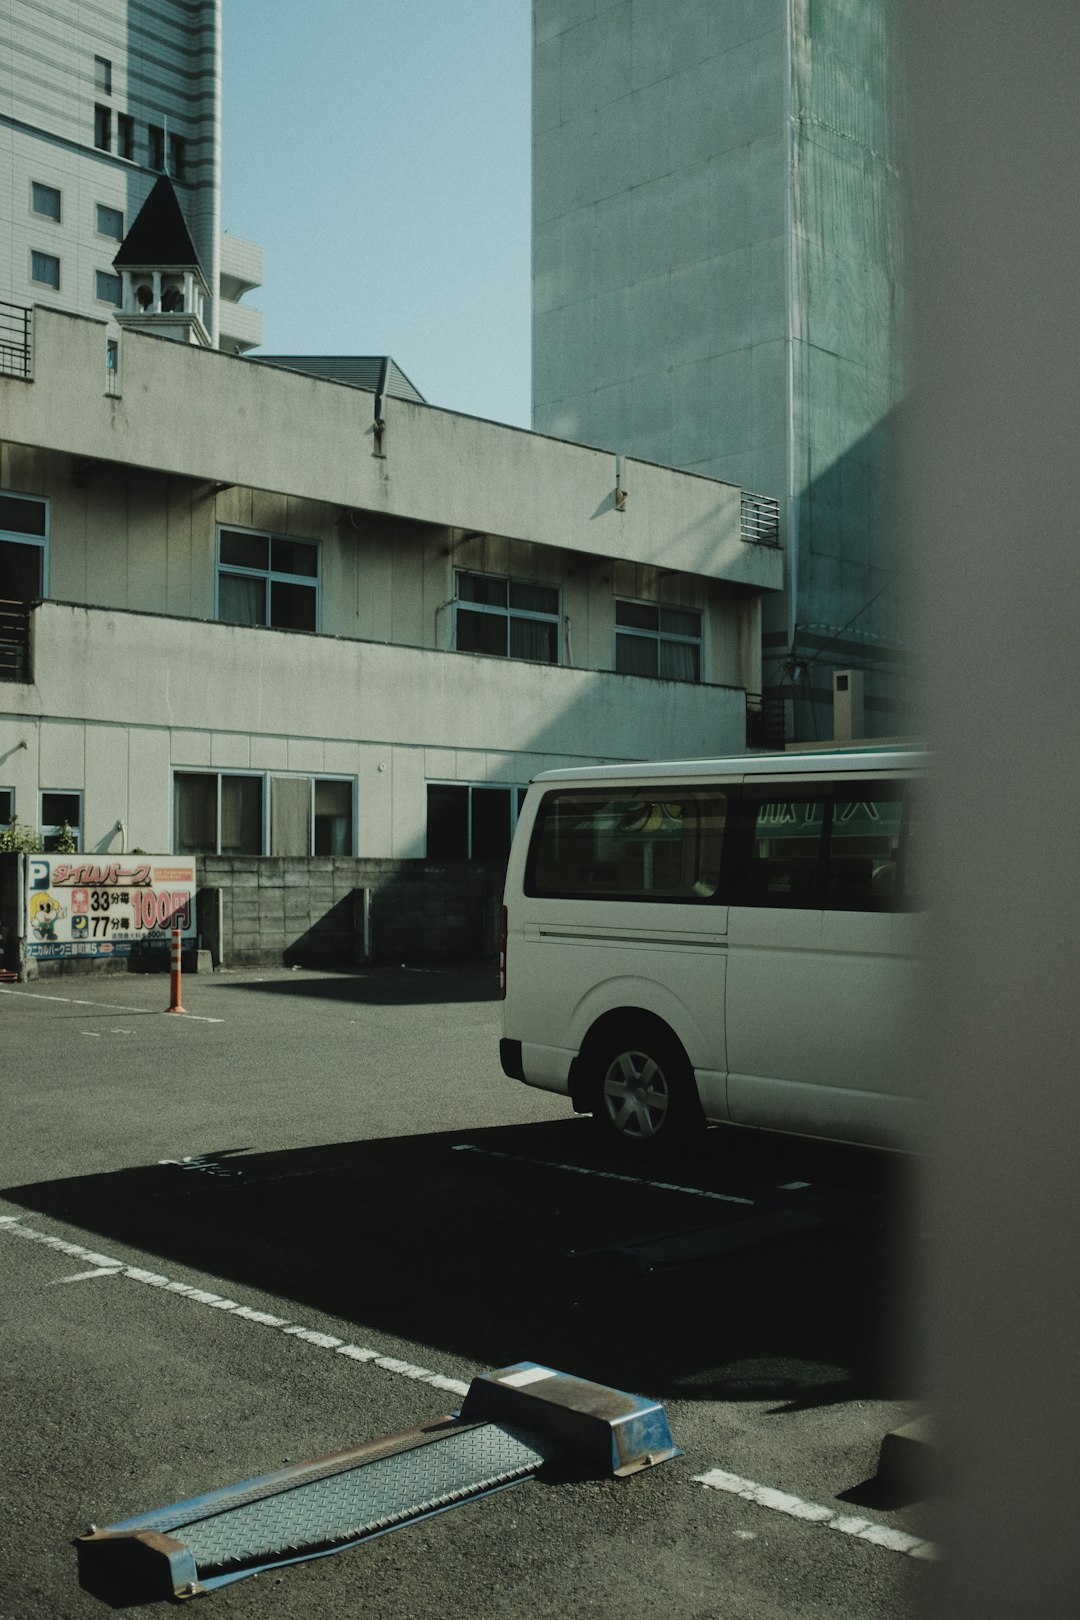 white van parked near building during daytime